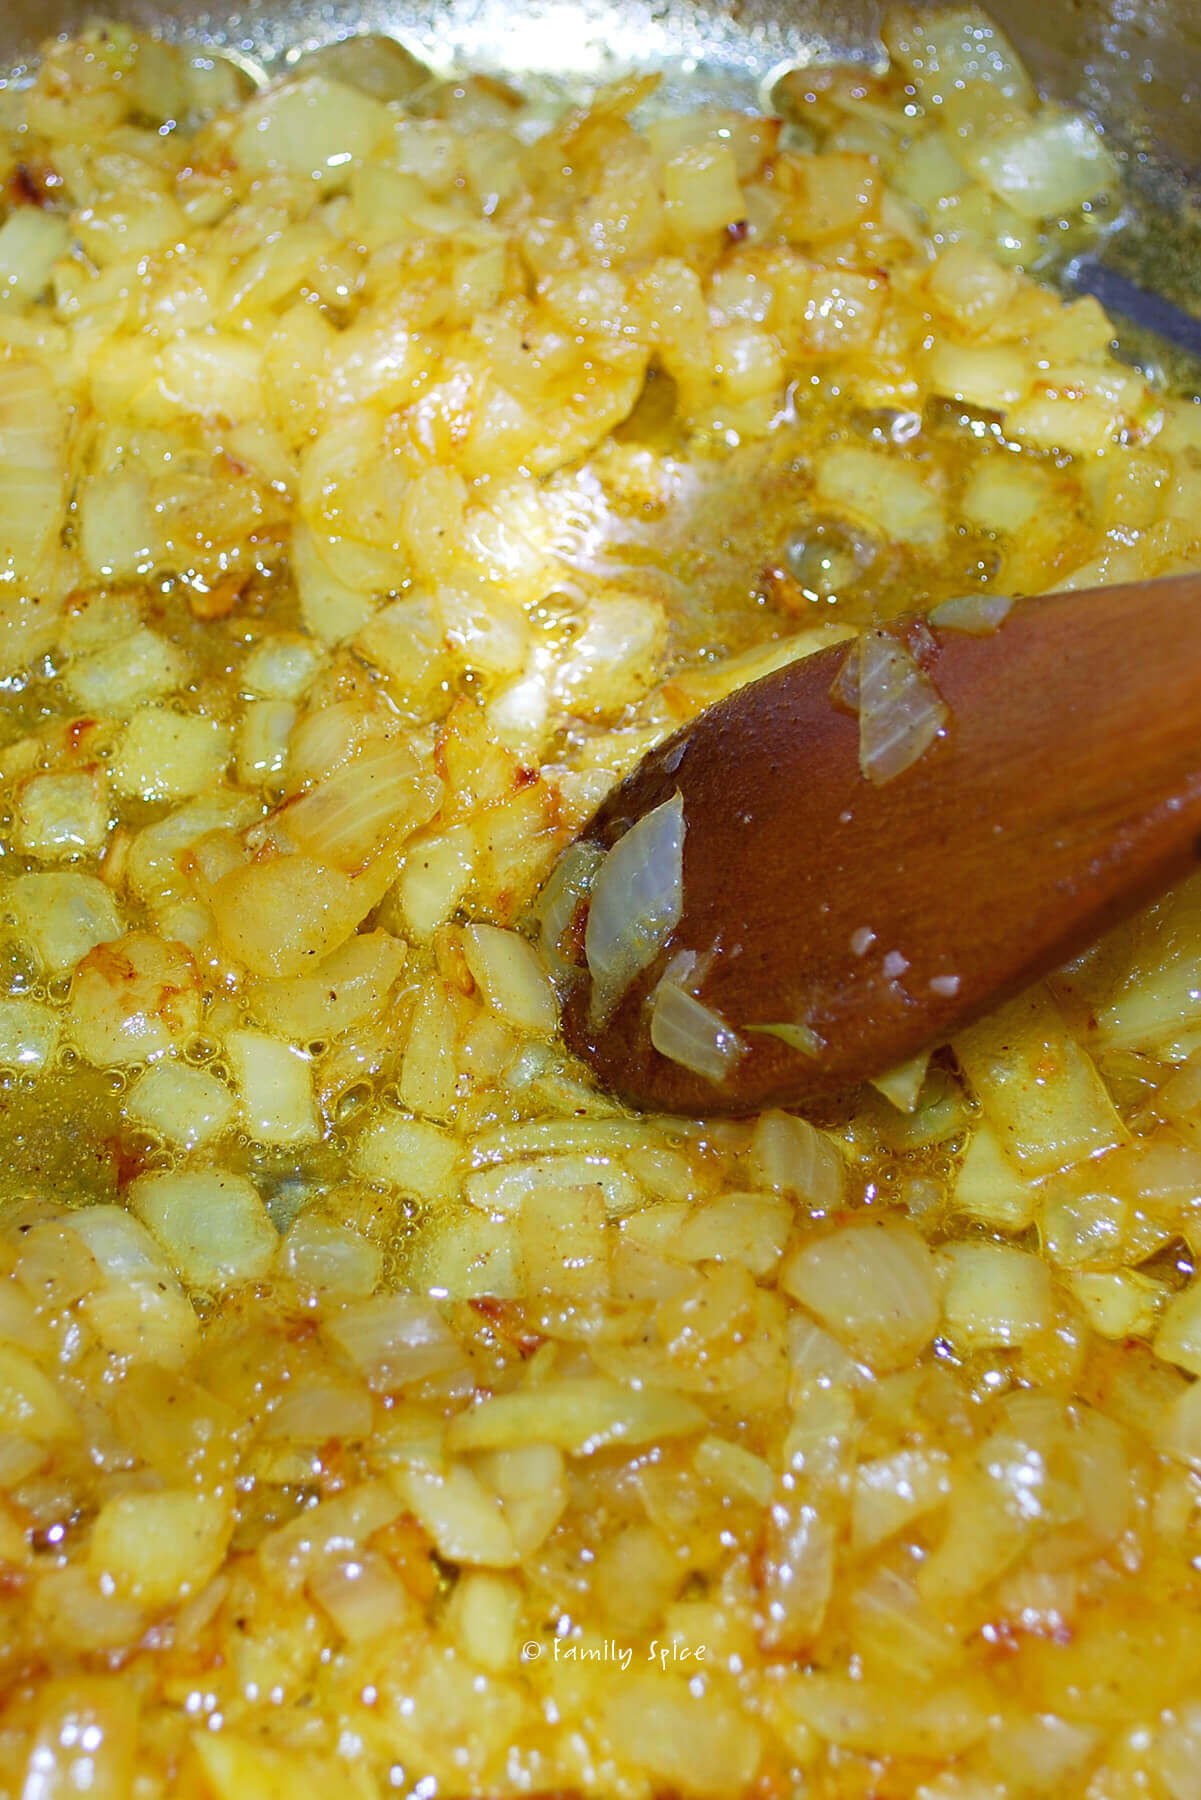 Onions seasoned with turmeric sautéed in a pot